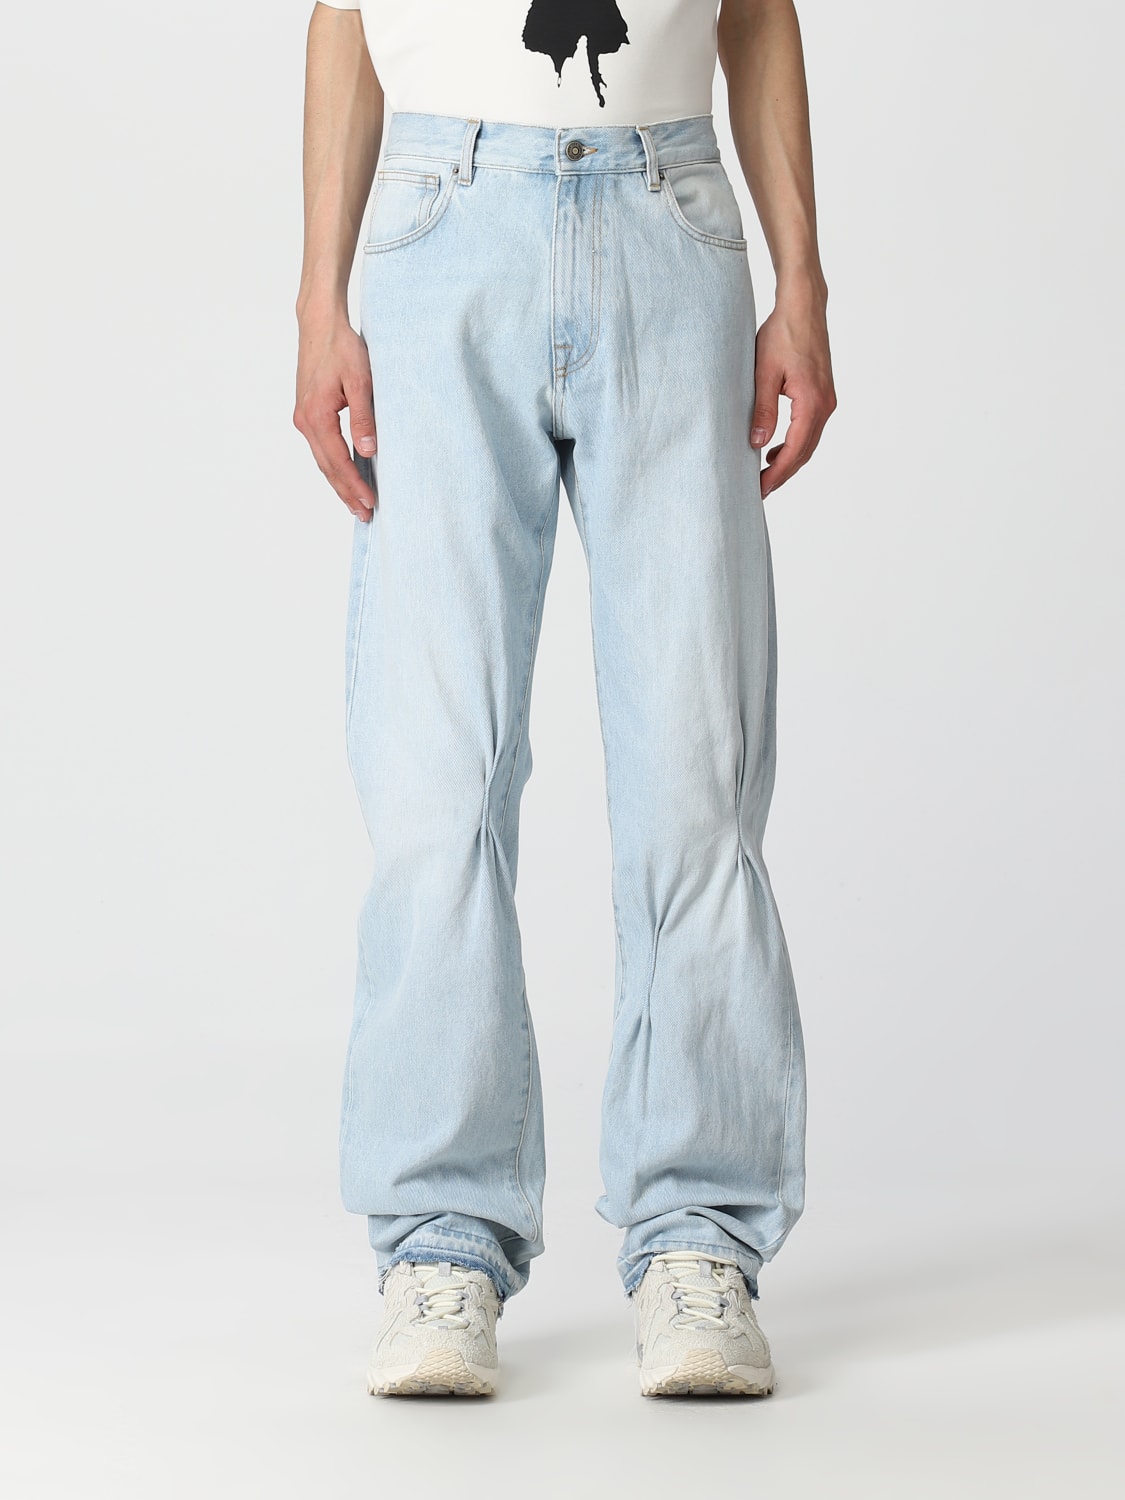 424 Outlet: jeans for man - Blue | 424 jeans 34424PJ01L1236061 online ...